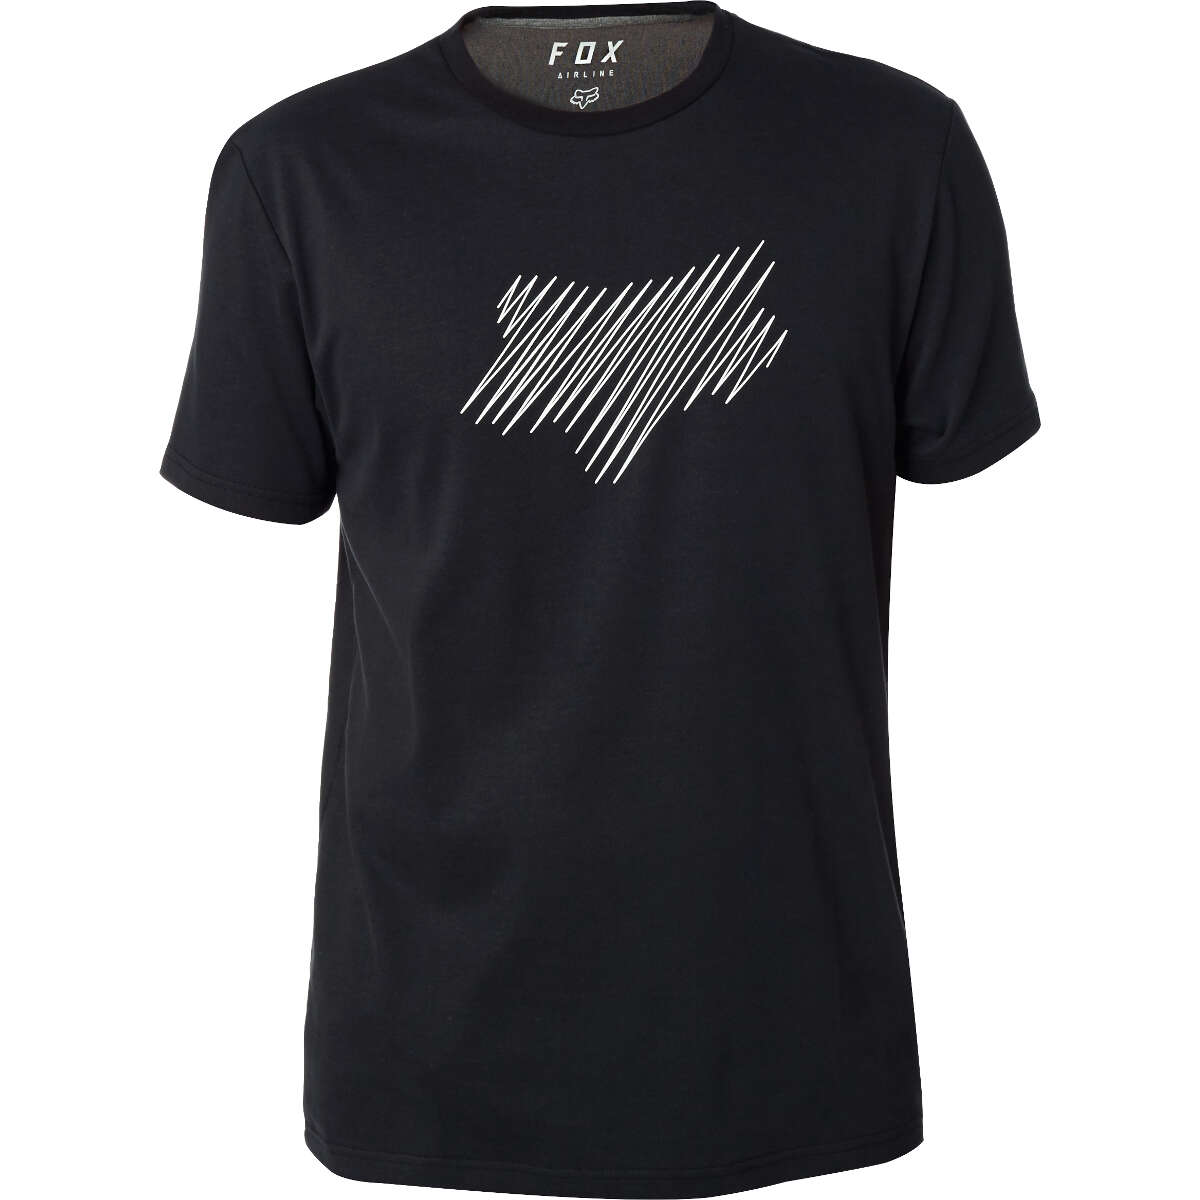 Fox T-Shirt Cresent Airline Black/Grey